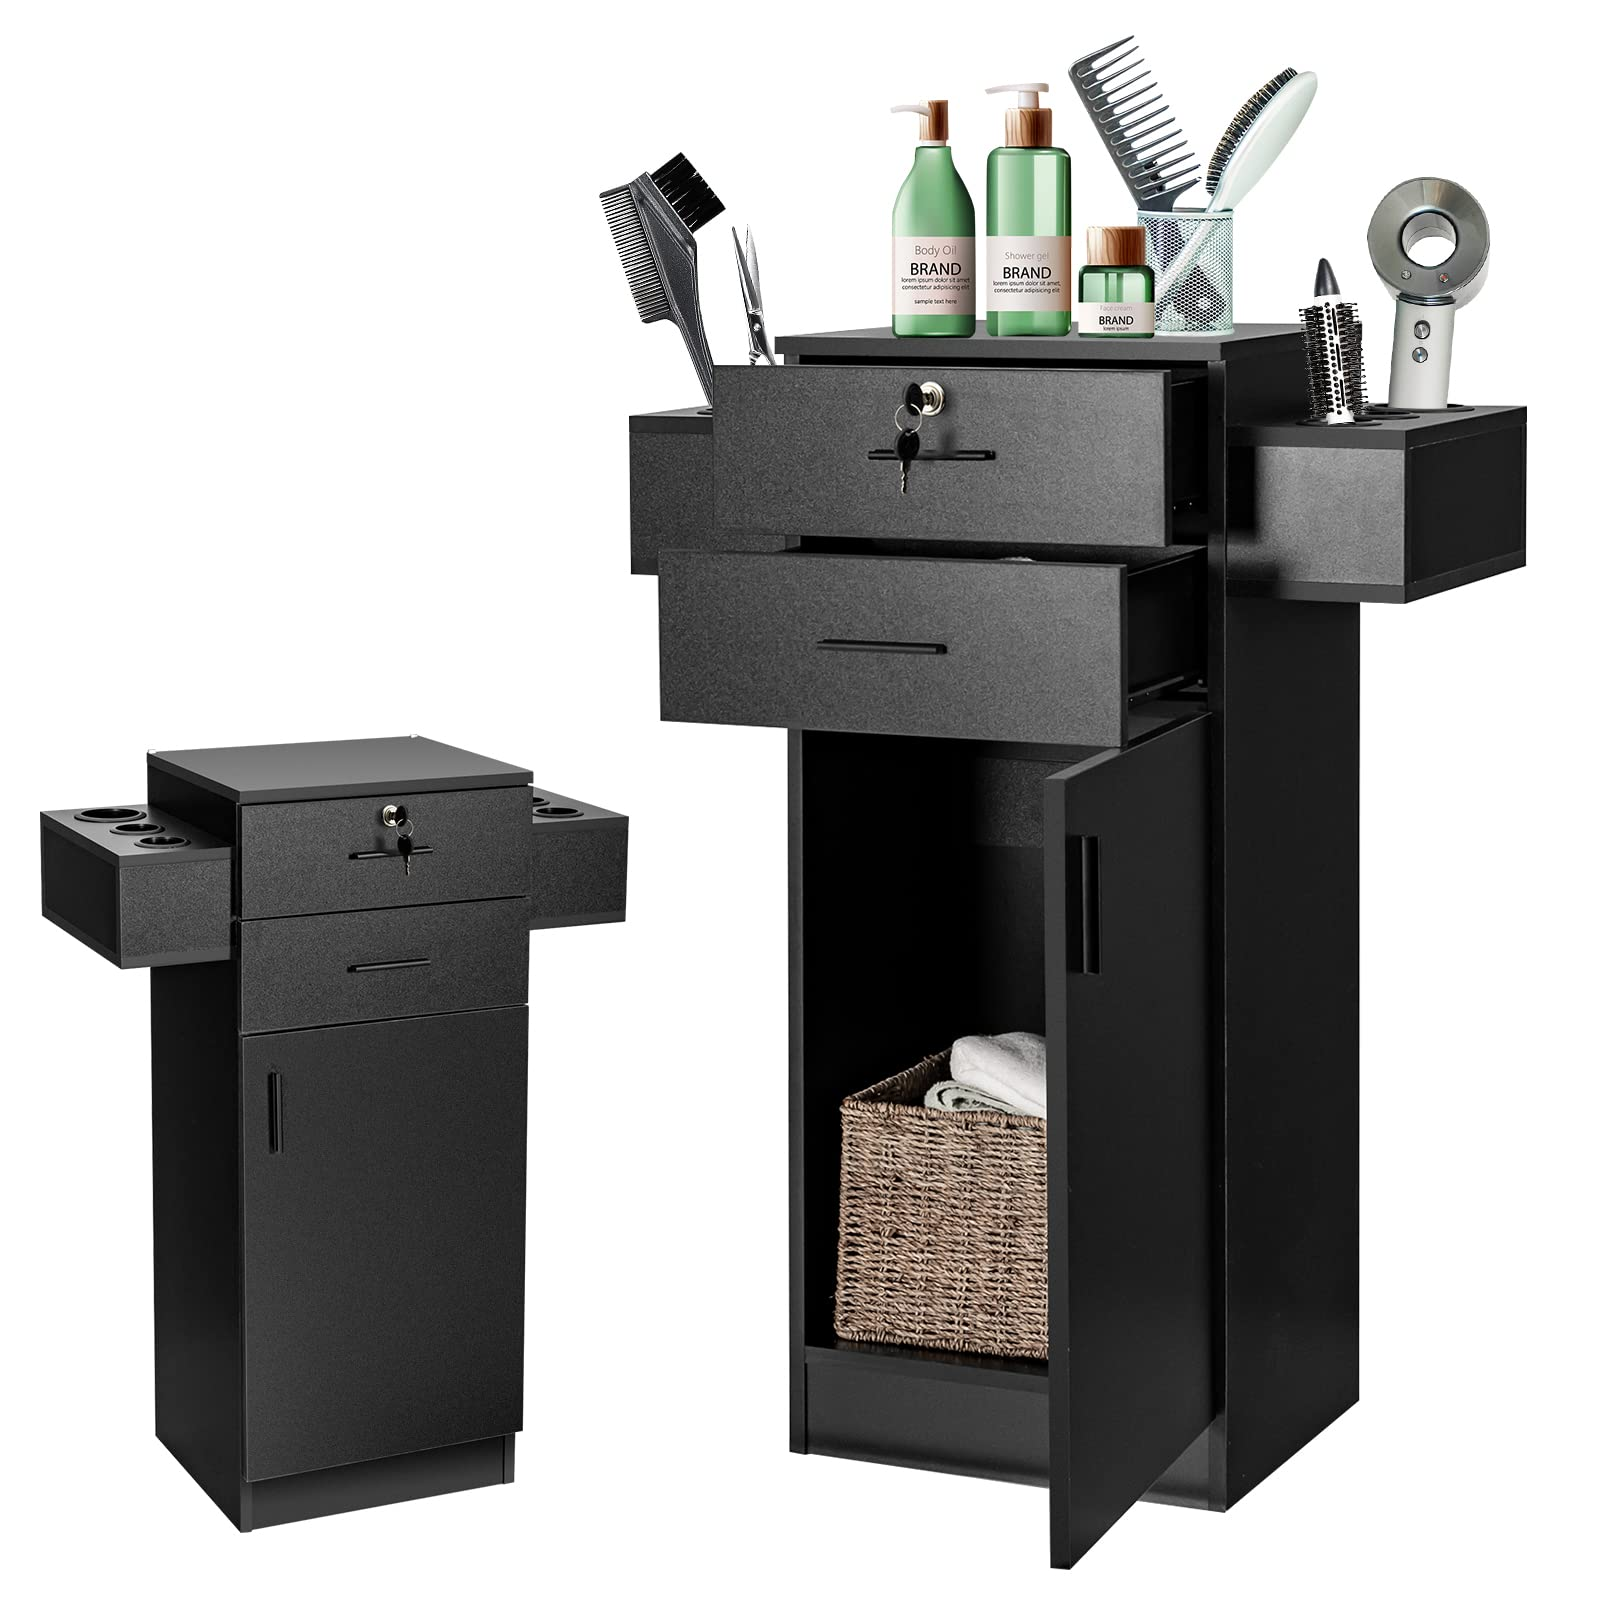 Salon Station Storage Cabinet for Hair Stylist, Black